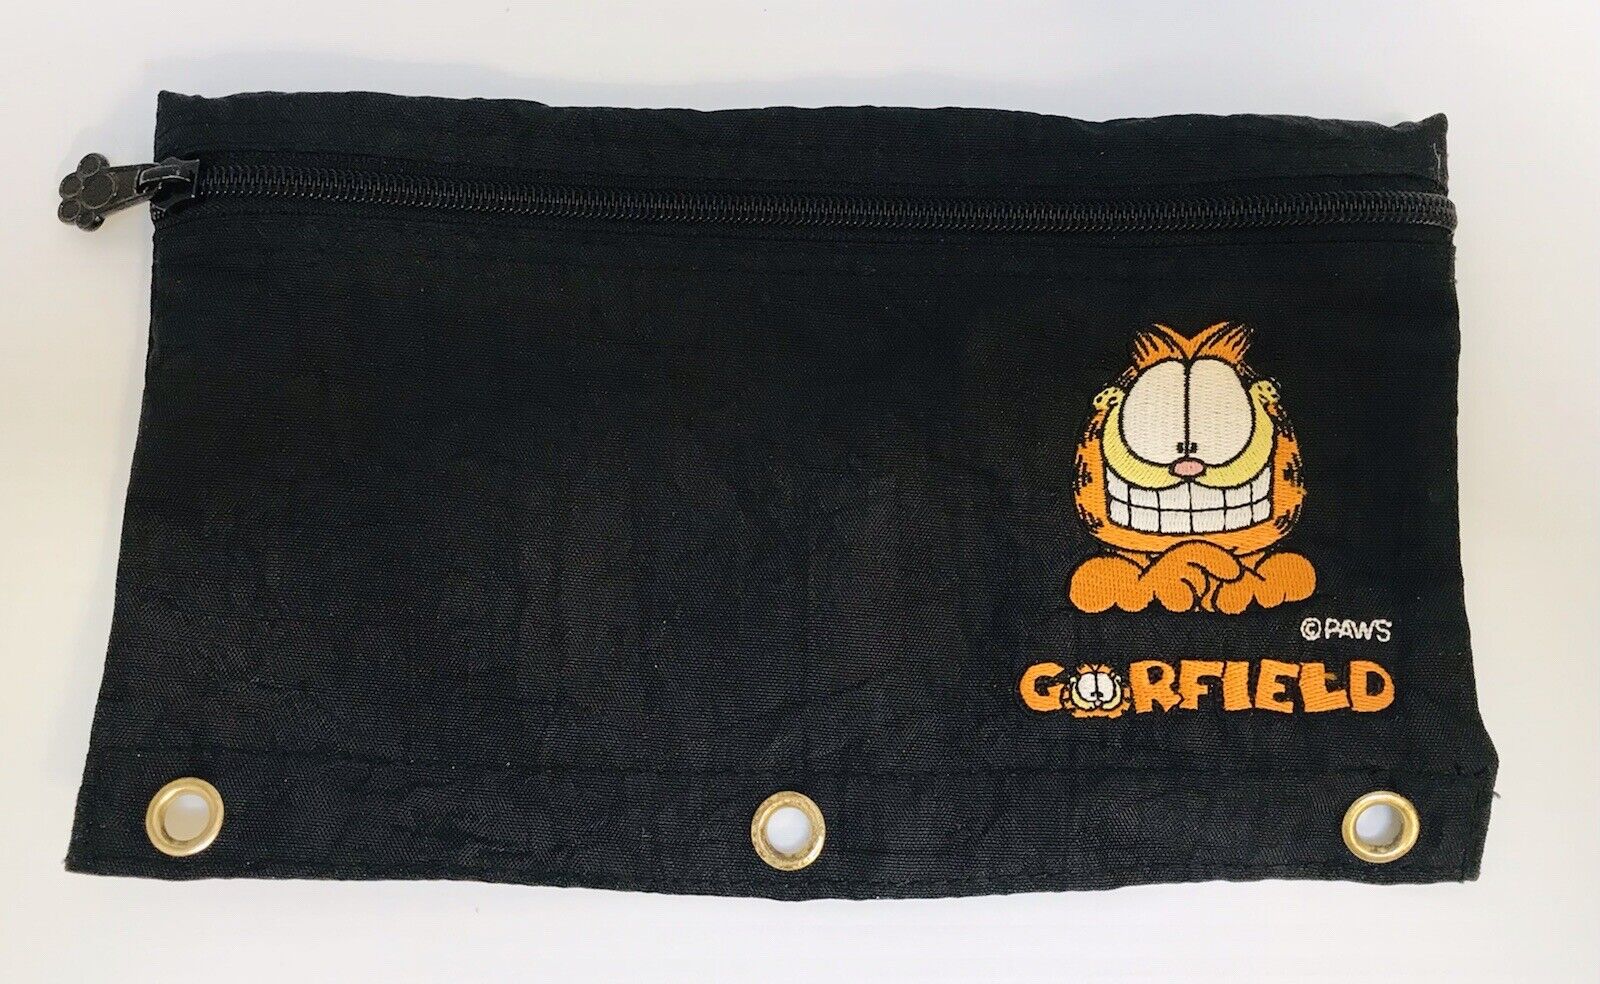 Black Pencil Garfield Bag Mead School Notebook accessories holder Paws vintage